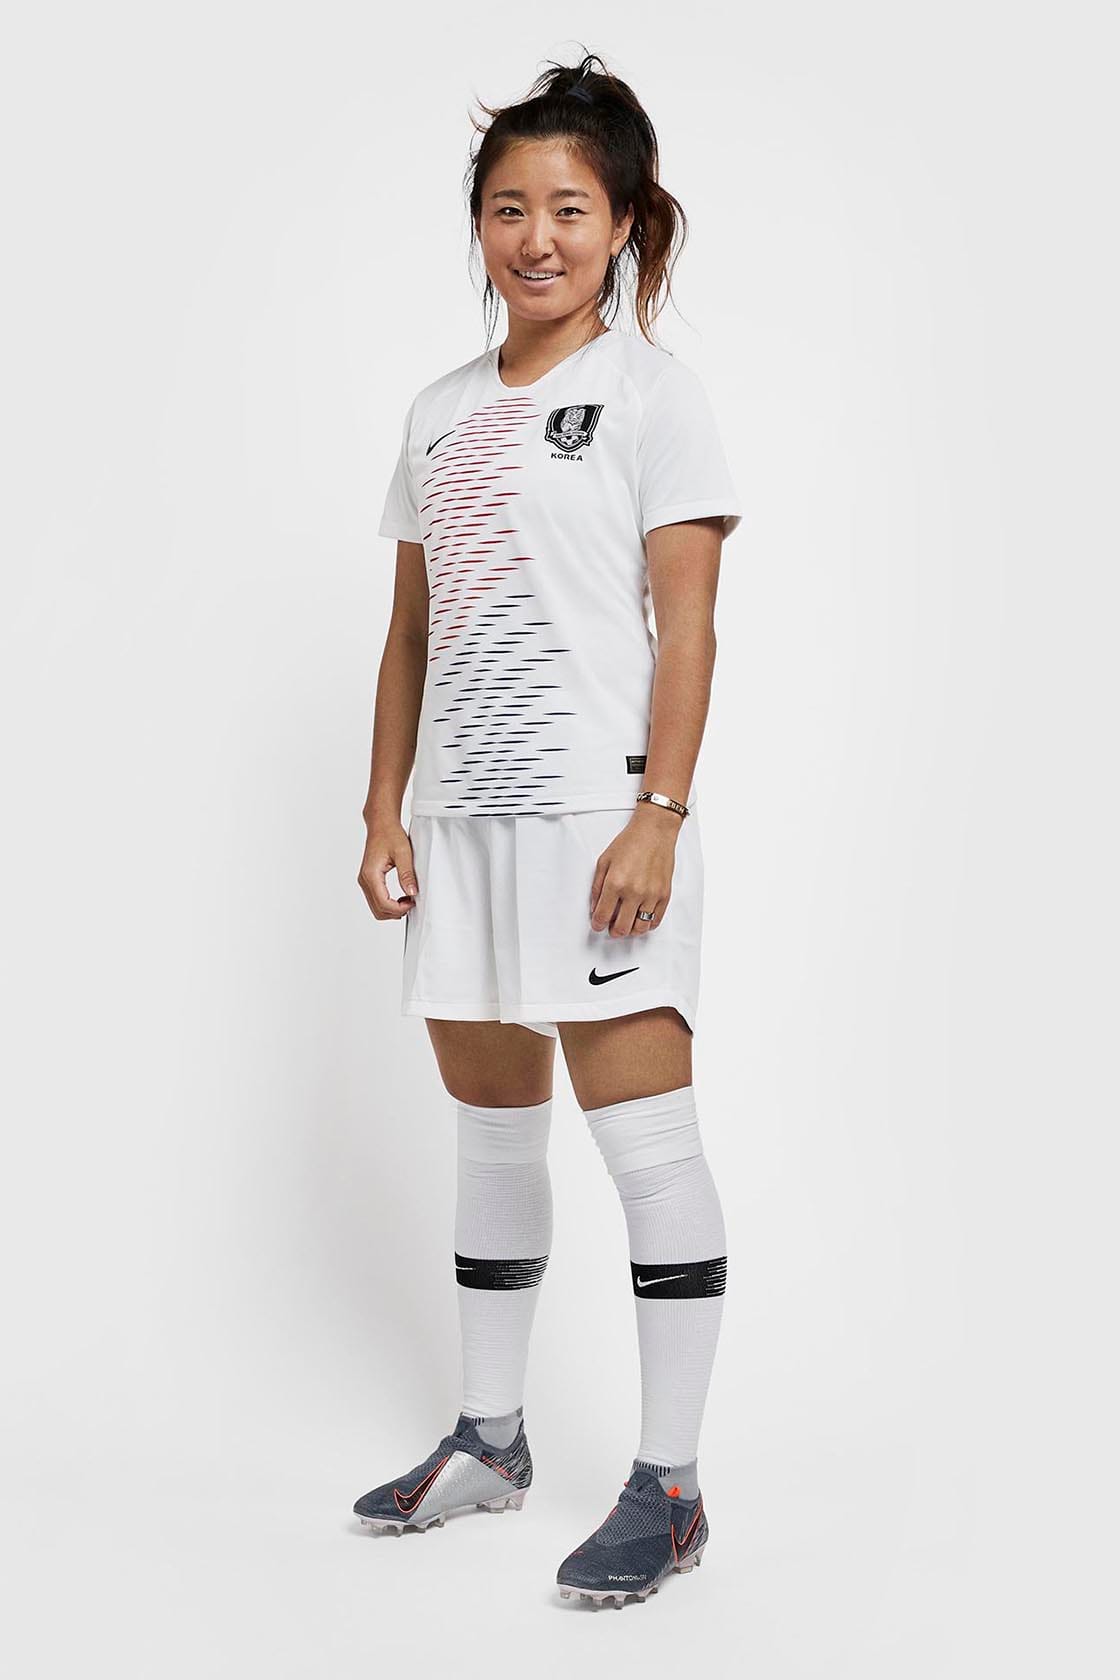 women's france soccer jersey 2019